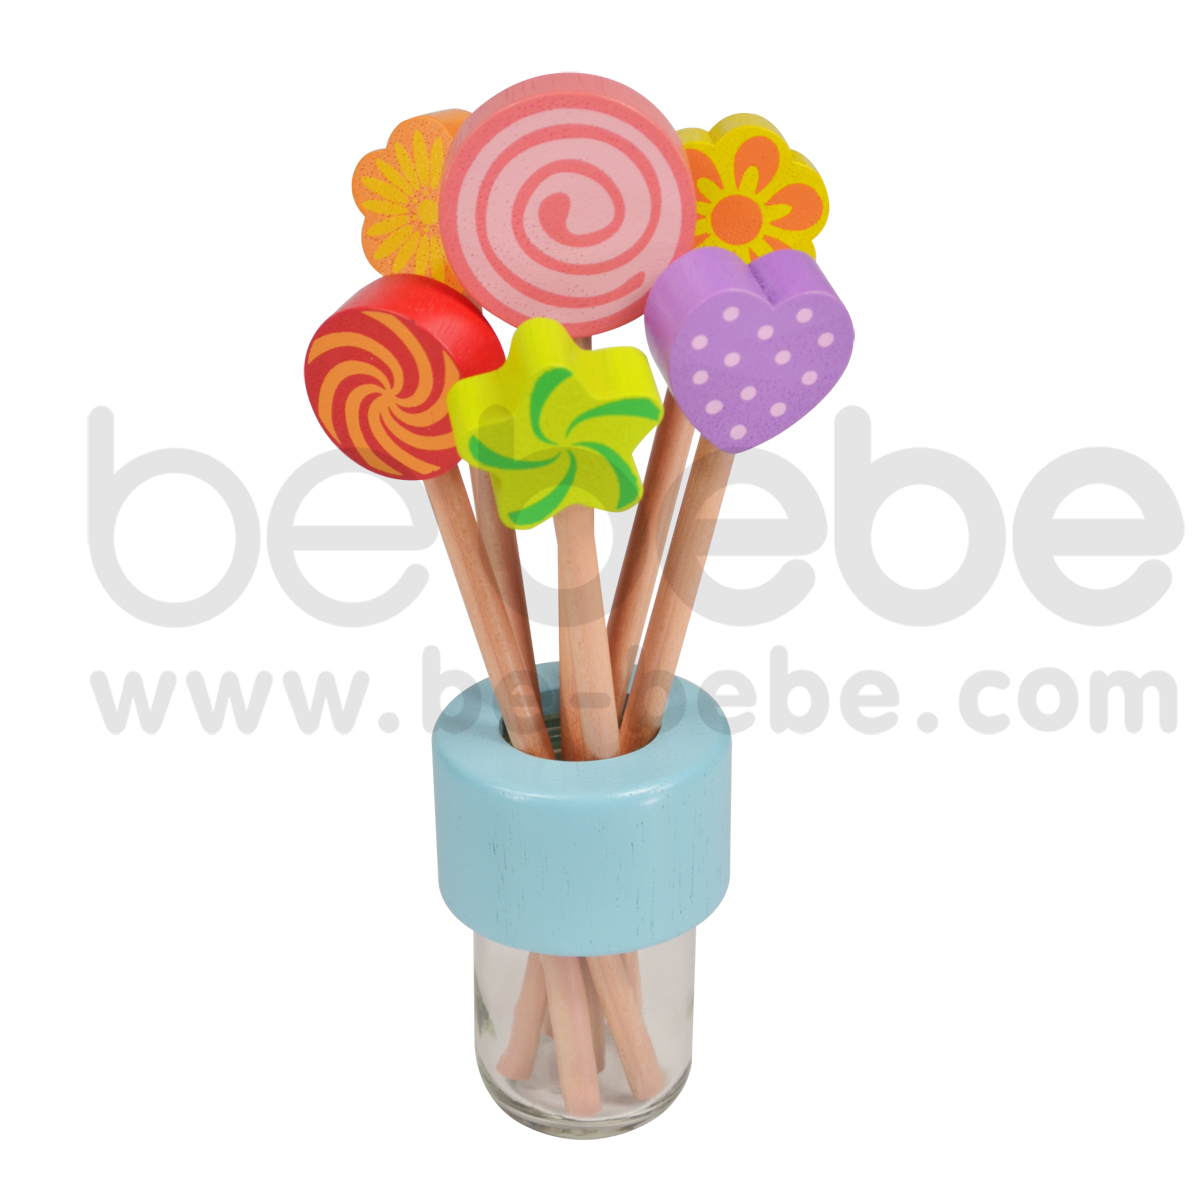 bebebe : Pencil-L-Circle-be happy/Pink